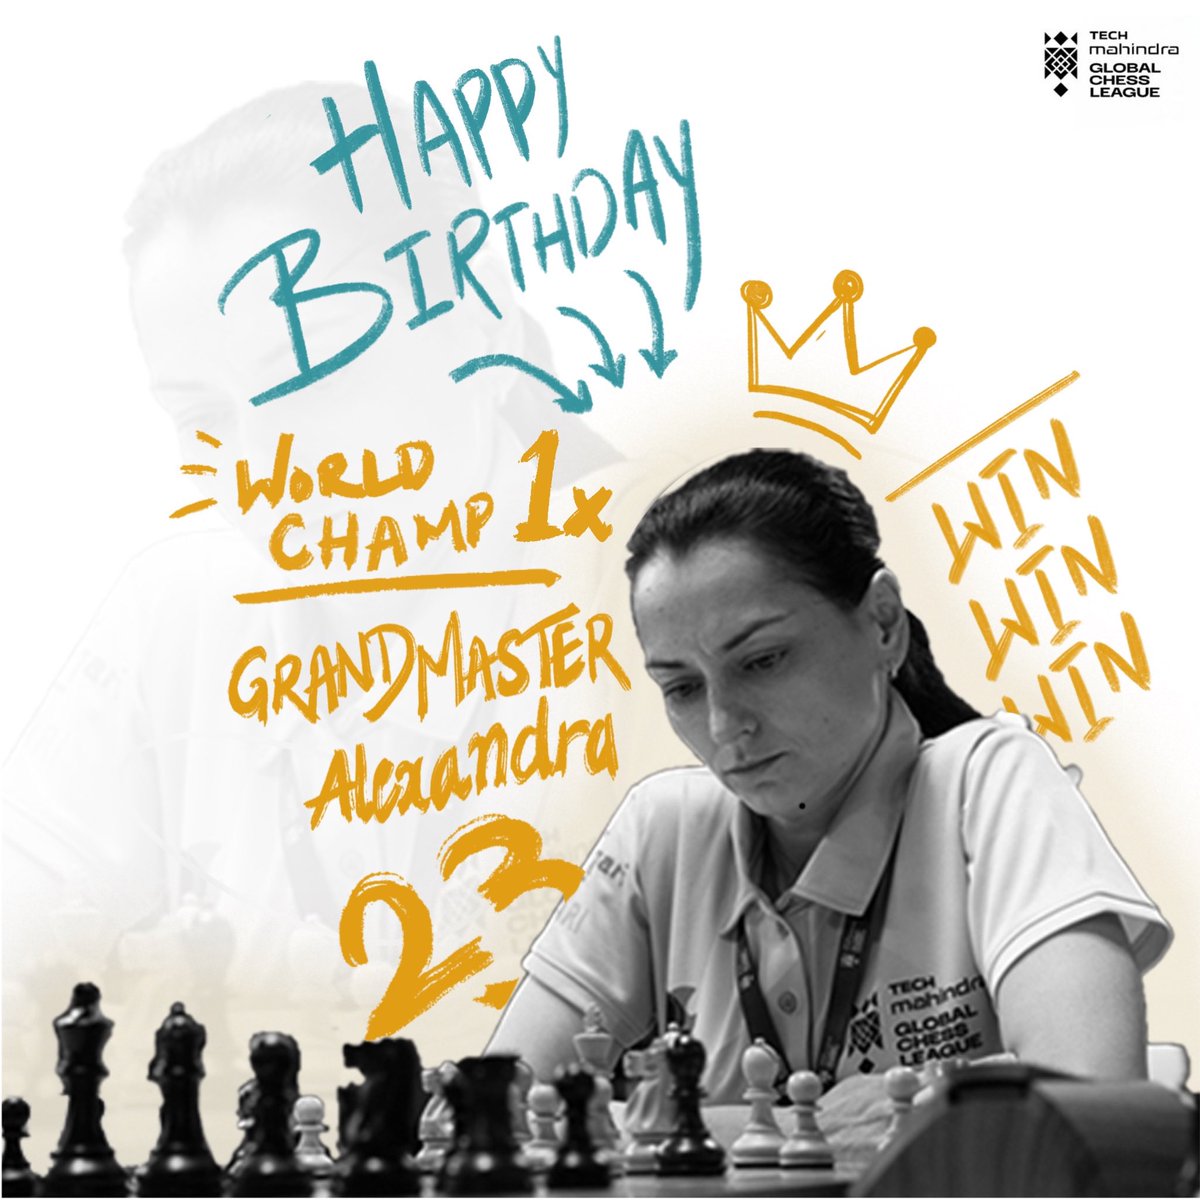 Wishing @gulf_titans superstar, @chessqueen Alexandra Kosteniuk a very happy birthday! 🎂 #TheBigMove #GCL #GlobalChessLeague #alexandrakosteniuk